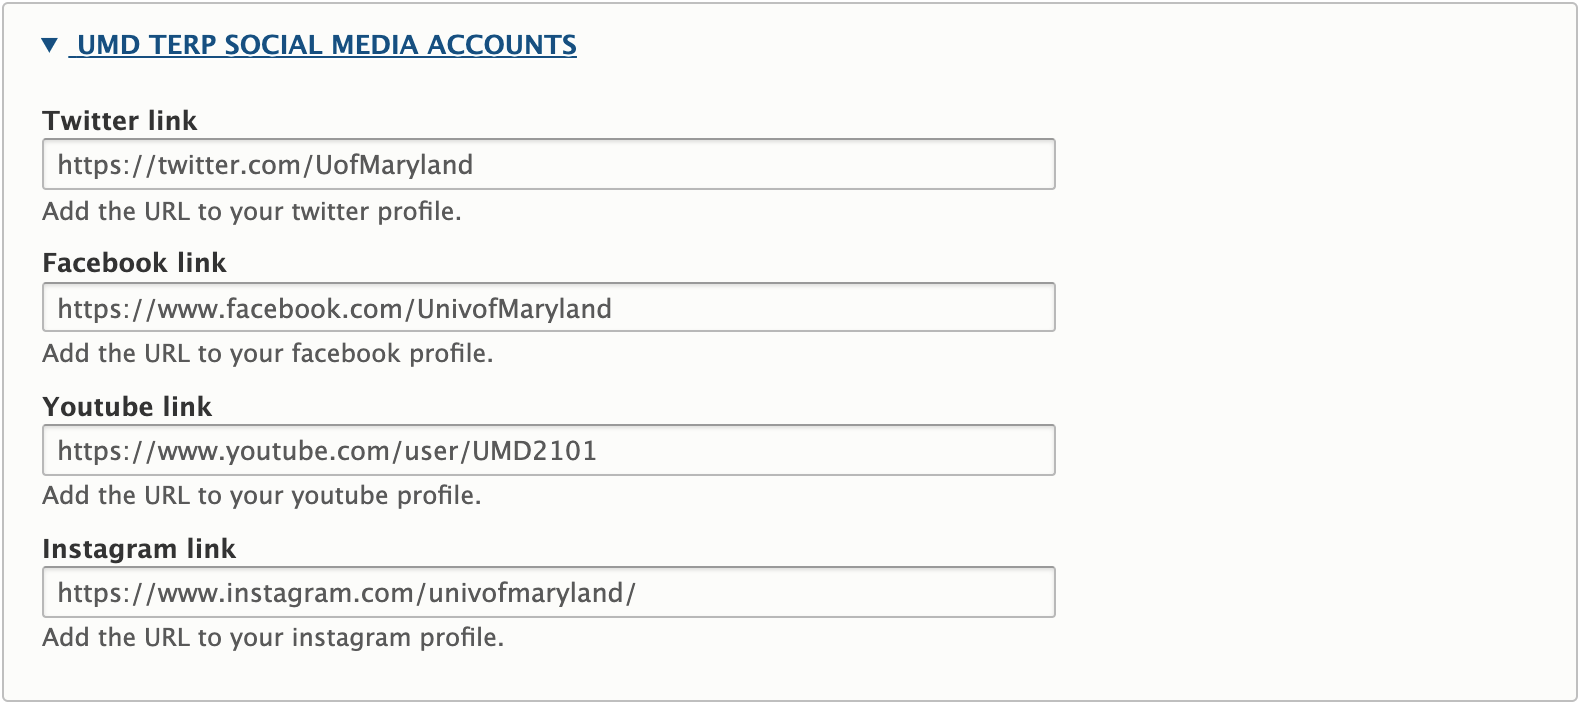 UMD Terp social media account fields